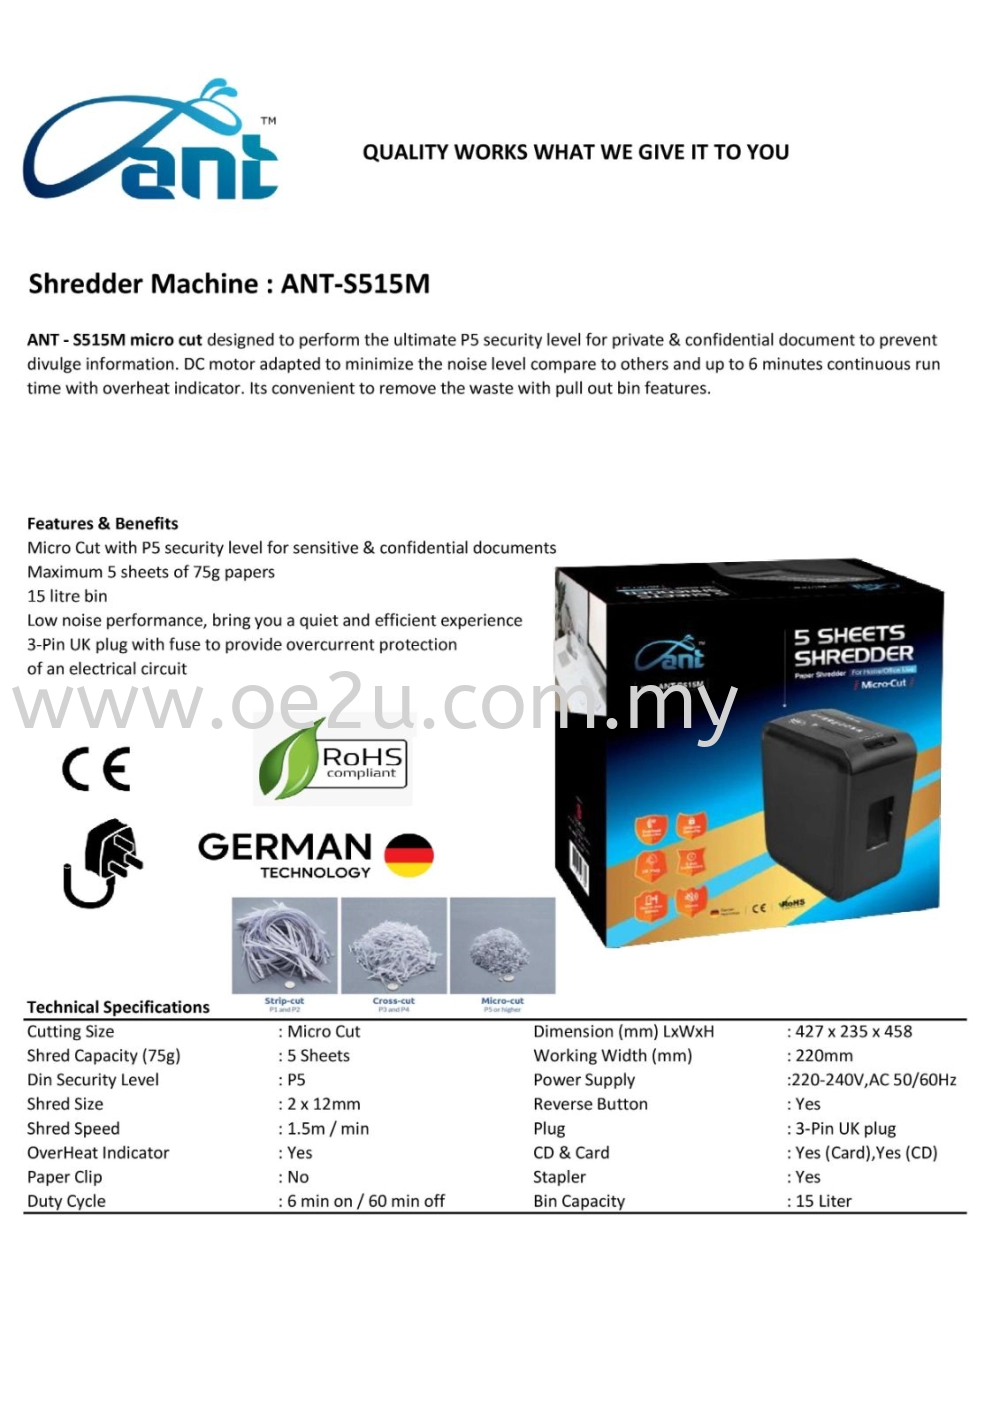 ANT-S515M Micro Cut Personal Shredder (Shred Capacity: 5 Sheets, Micro Cut: 2x12mm, Bin Capacity: 15 Liters)